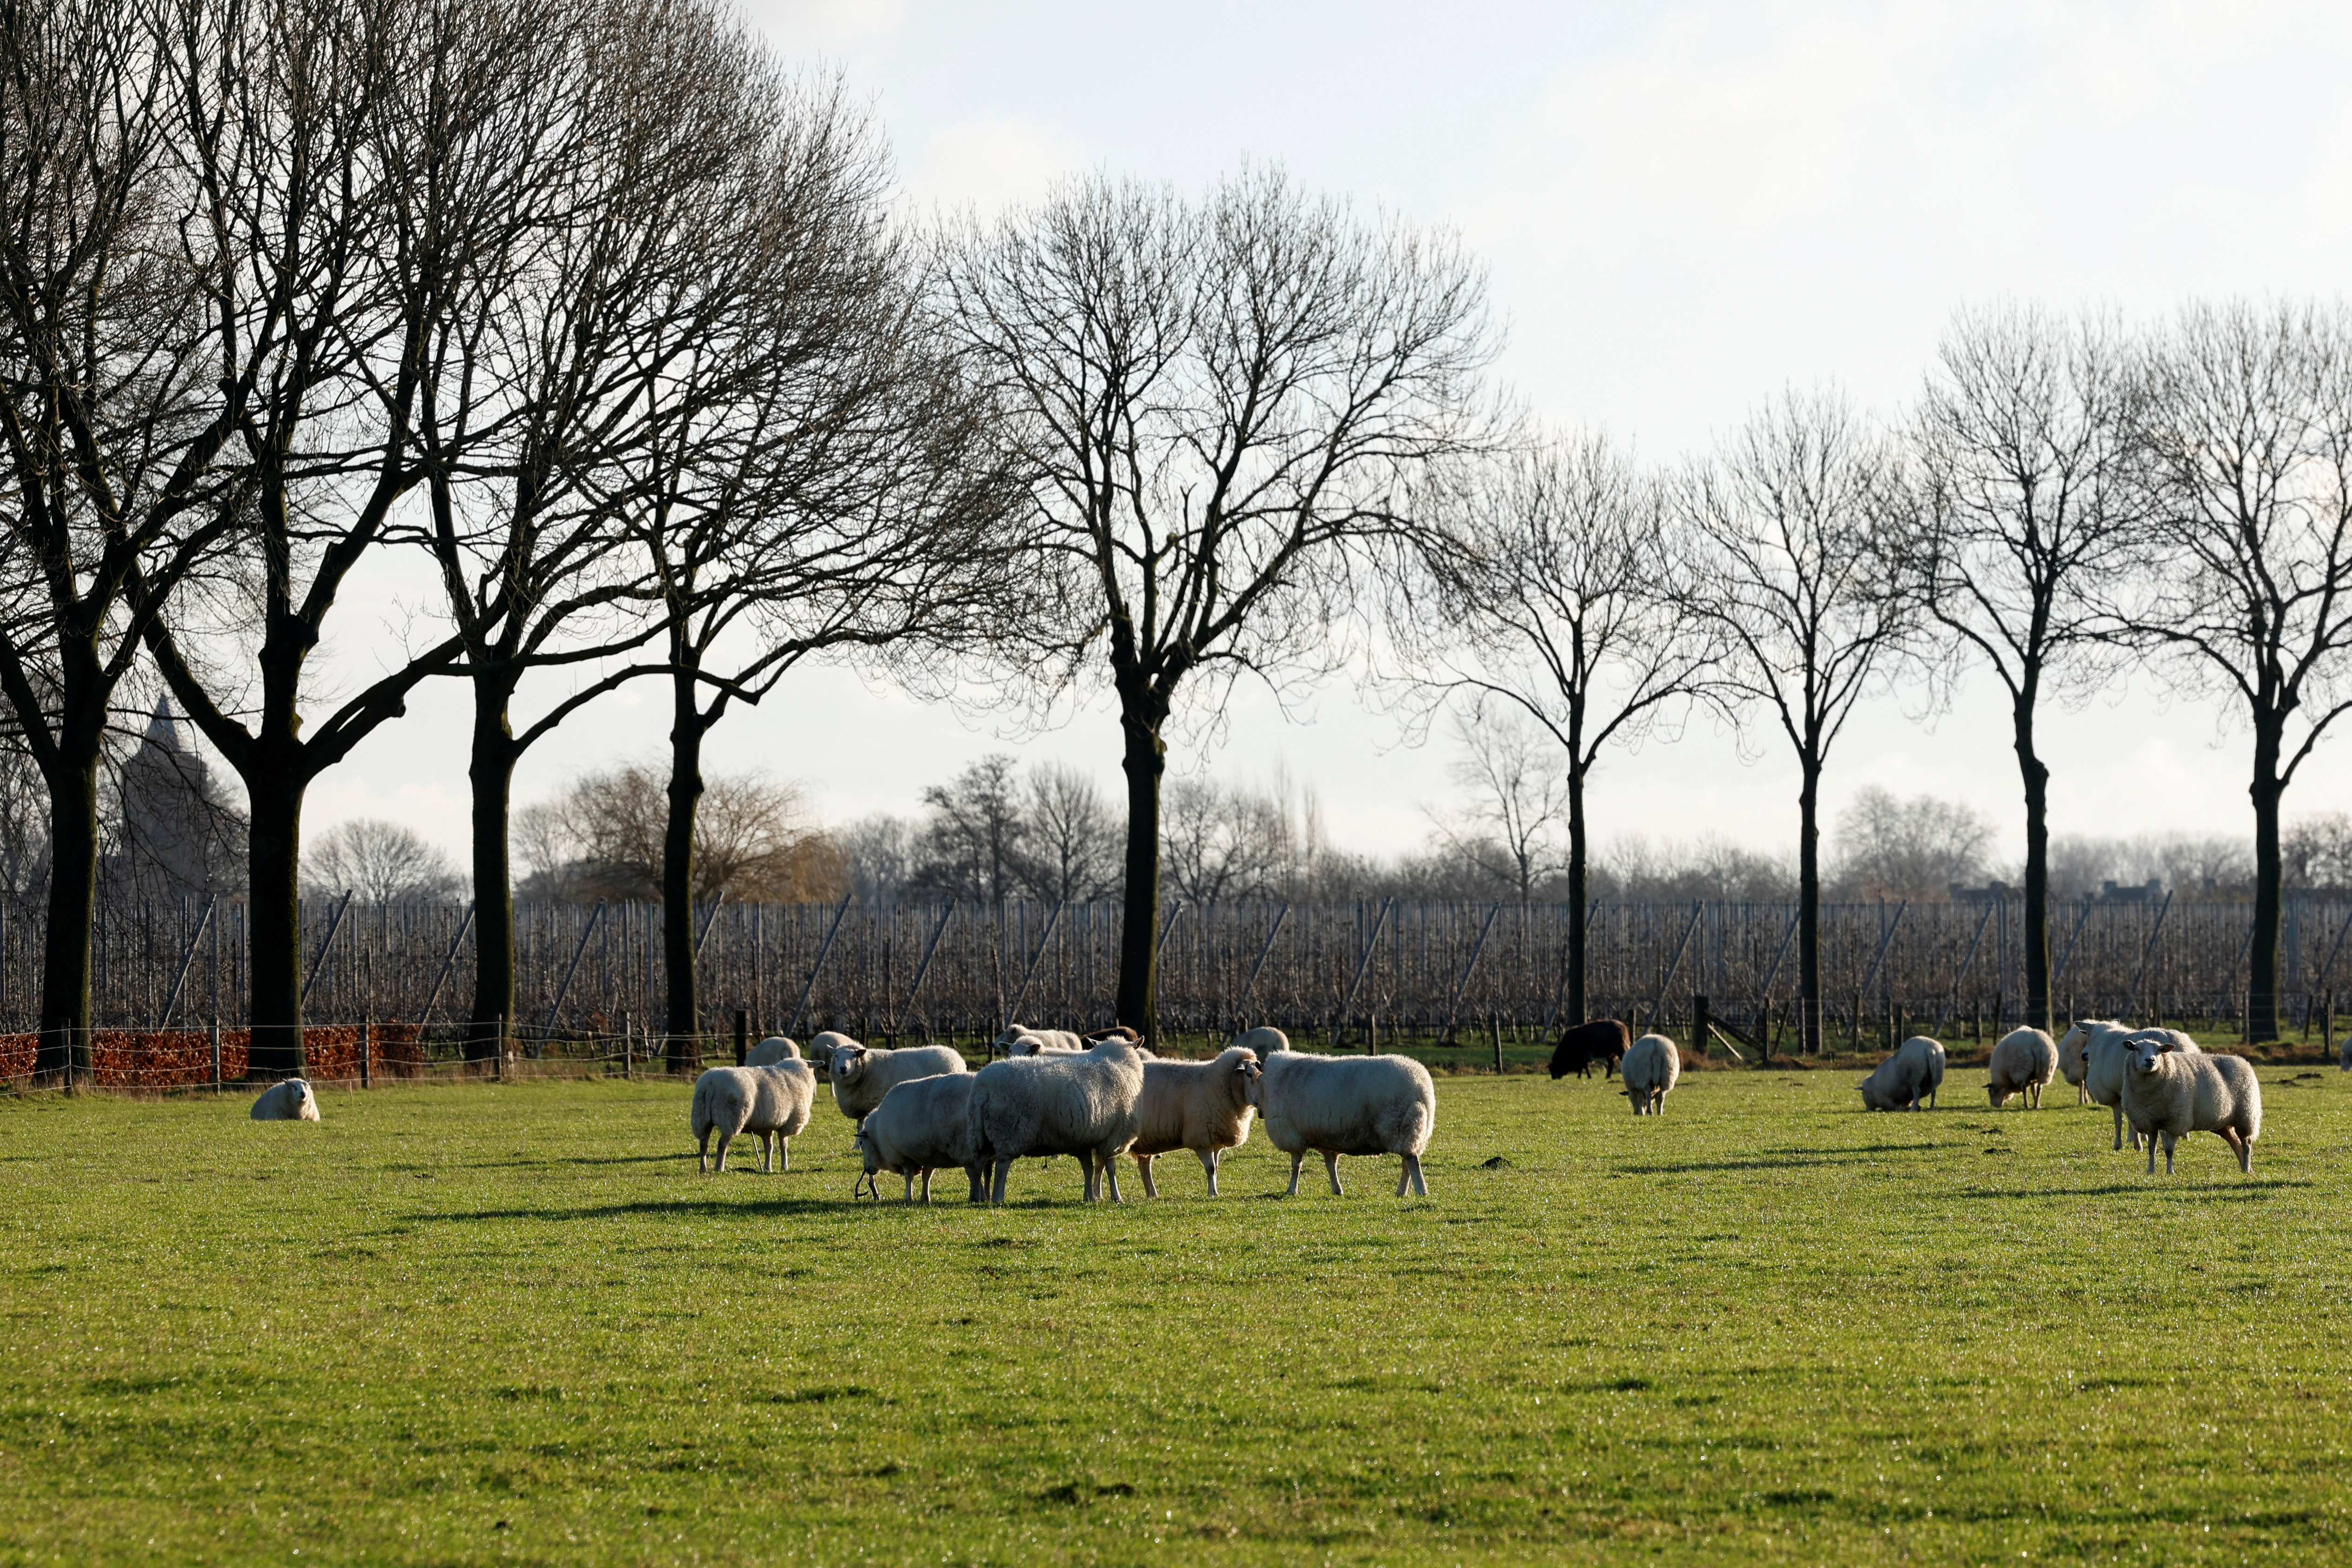 FILE PHOTO: A sheep in the village of Ommeren, the Netherlands (Reuters/Peruschka van de Wooo)